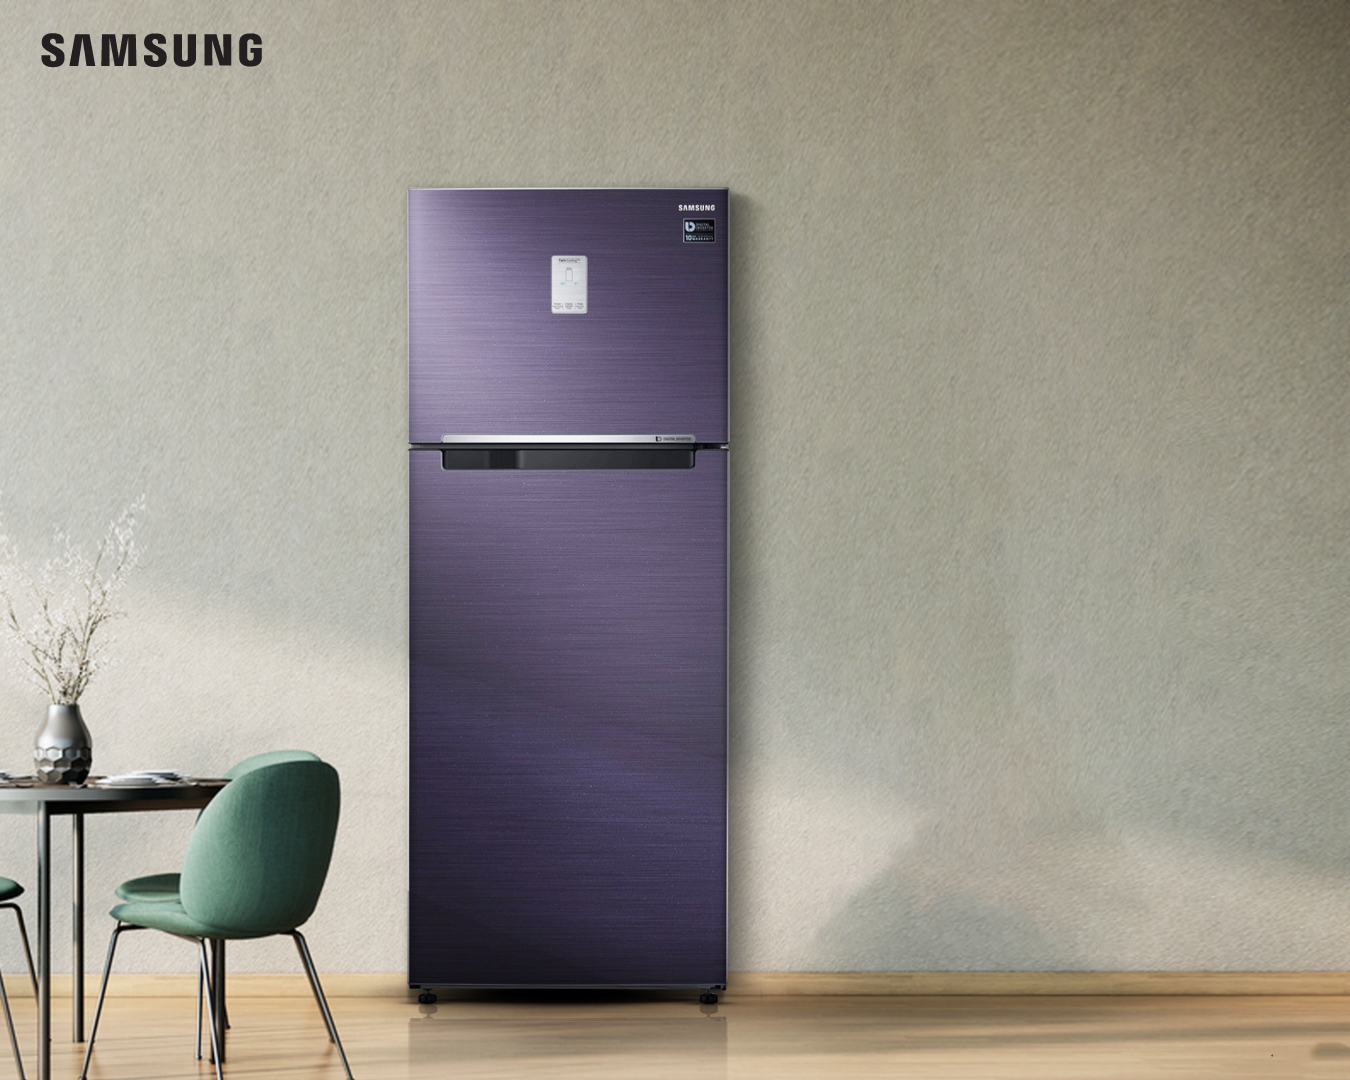 Samsung refrigerators